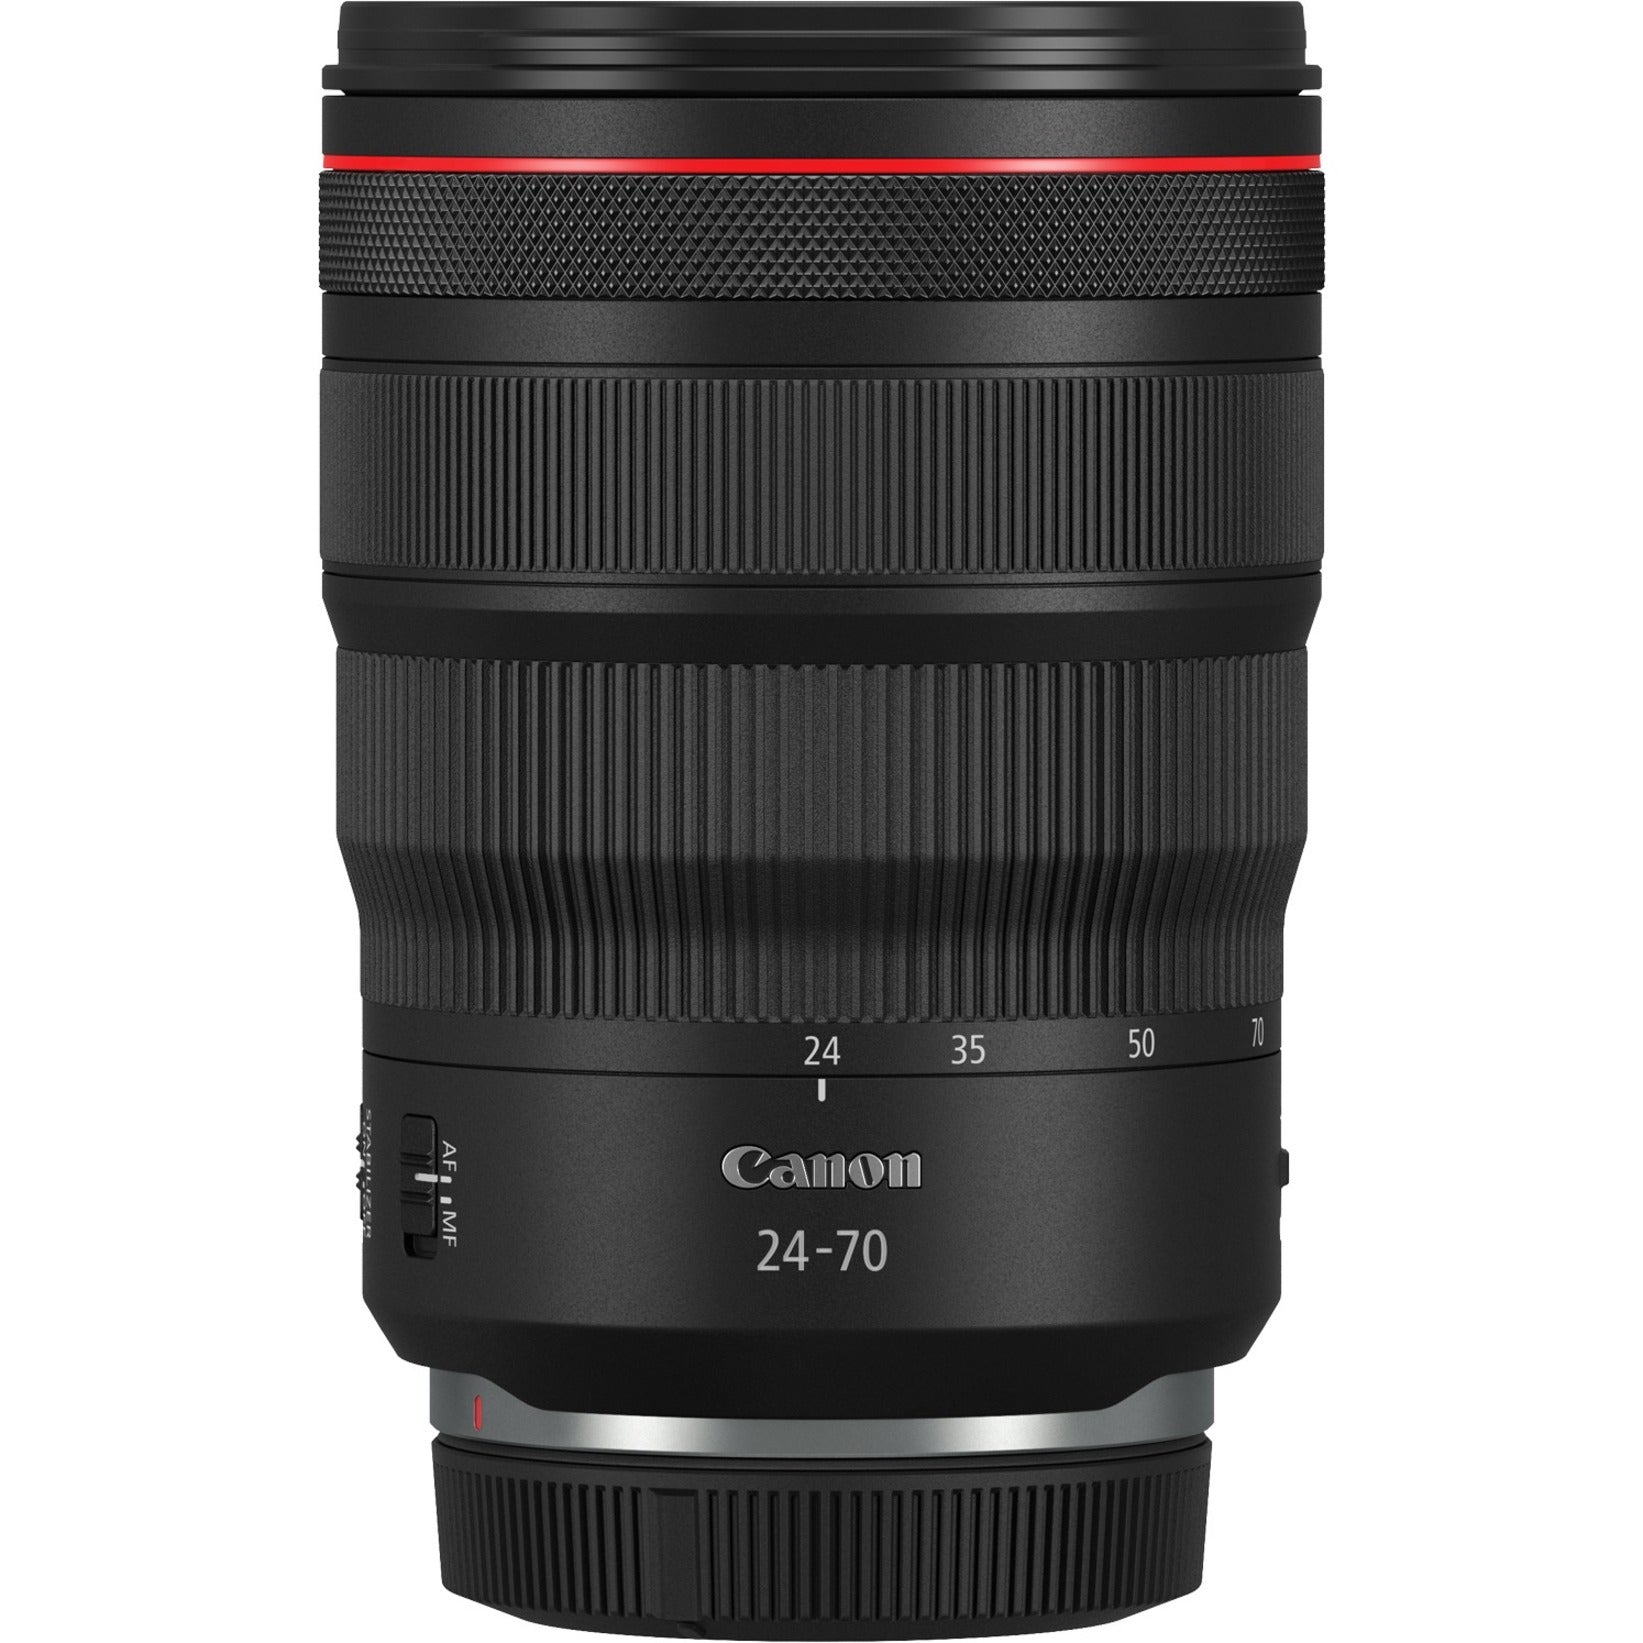 Canon 3680C002 RF 24-70mm F2.8 L IS USM Lens, Optical Zoom, Image Stabilization